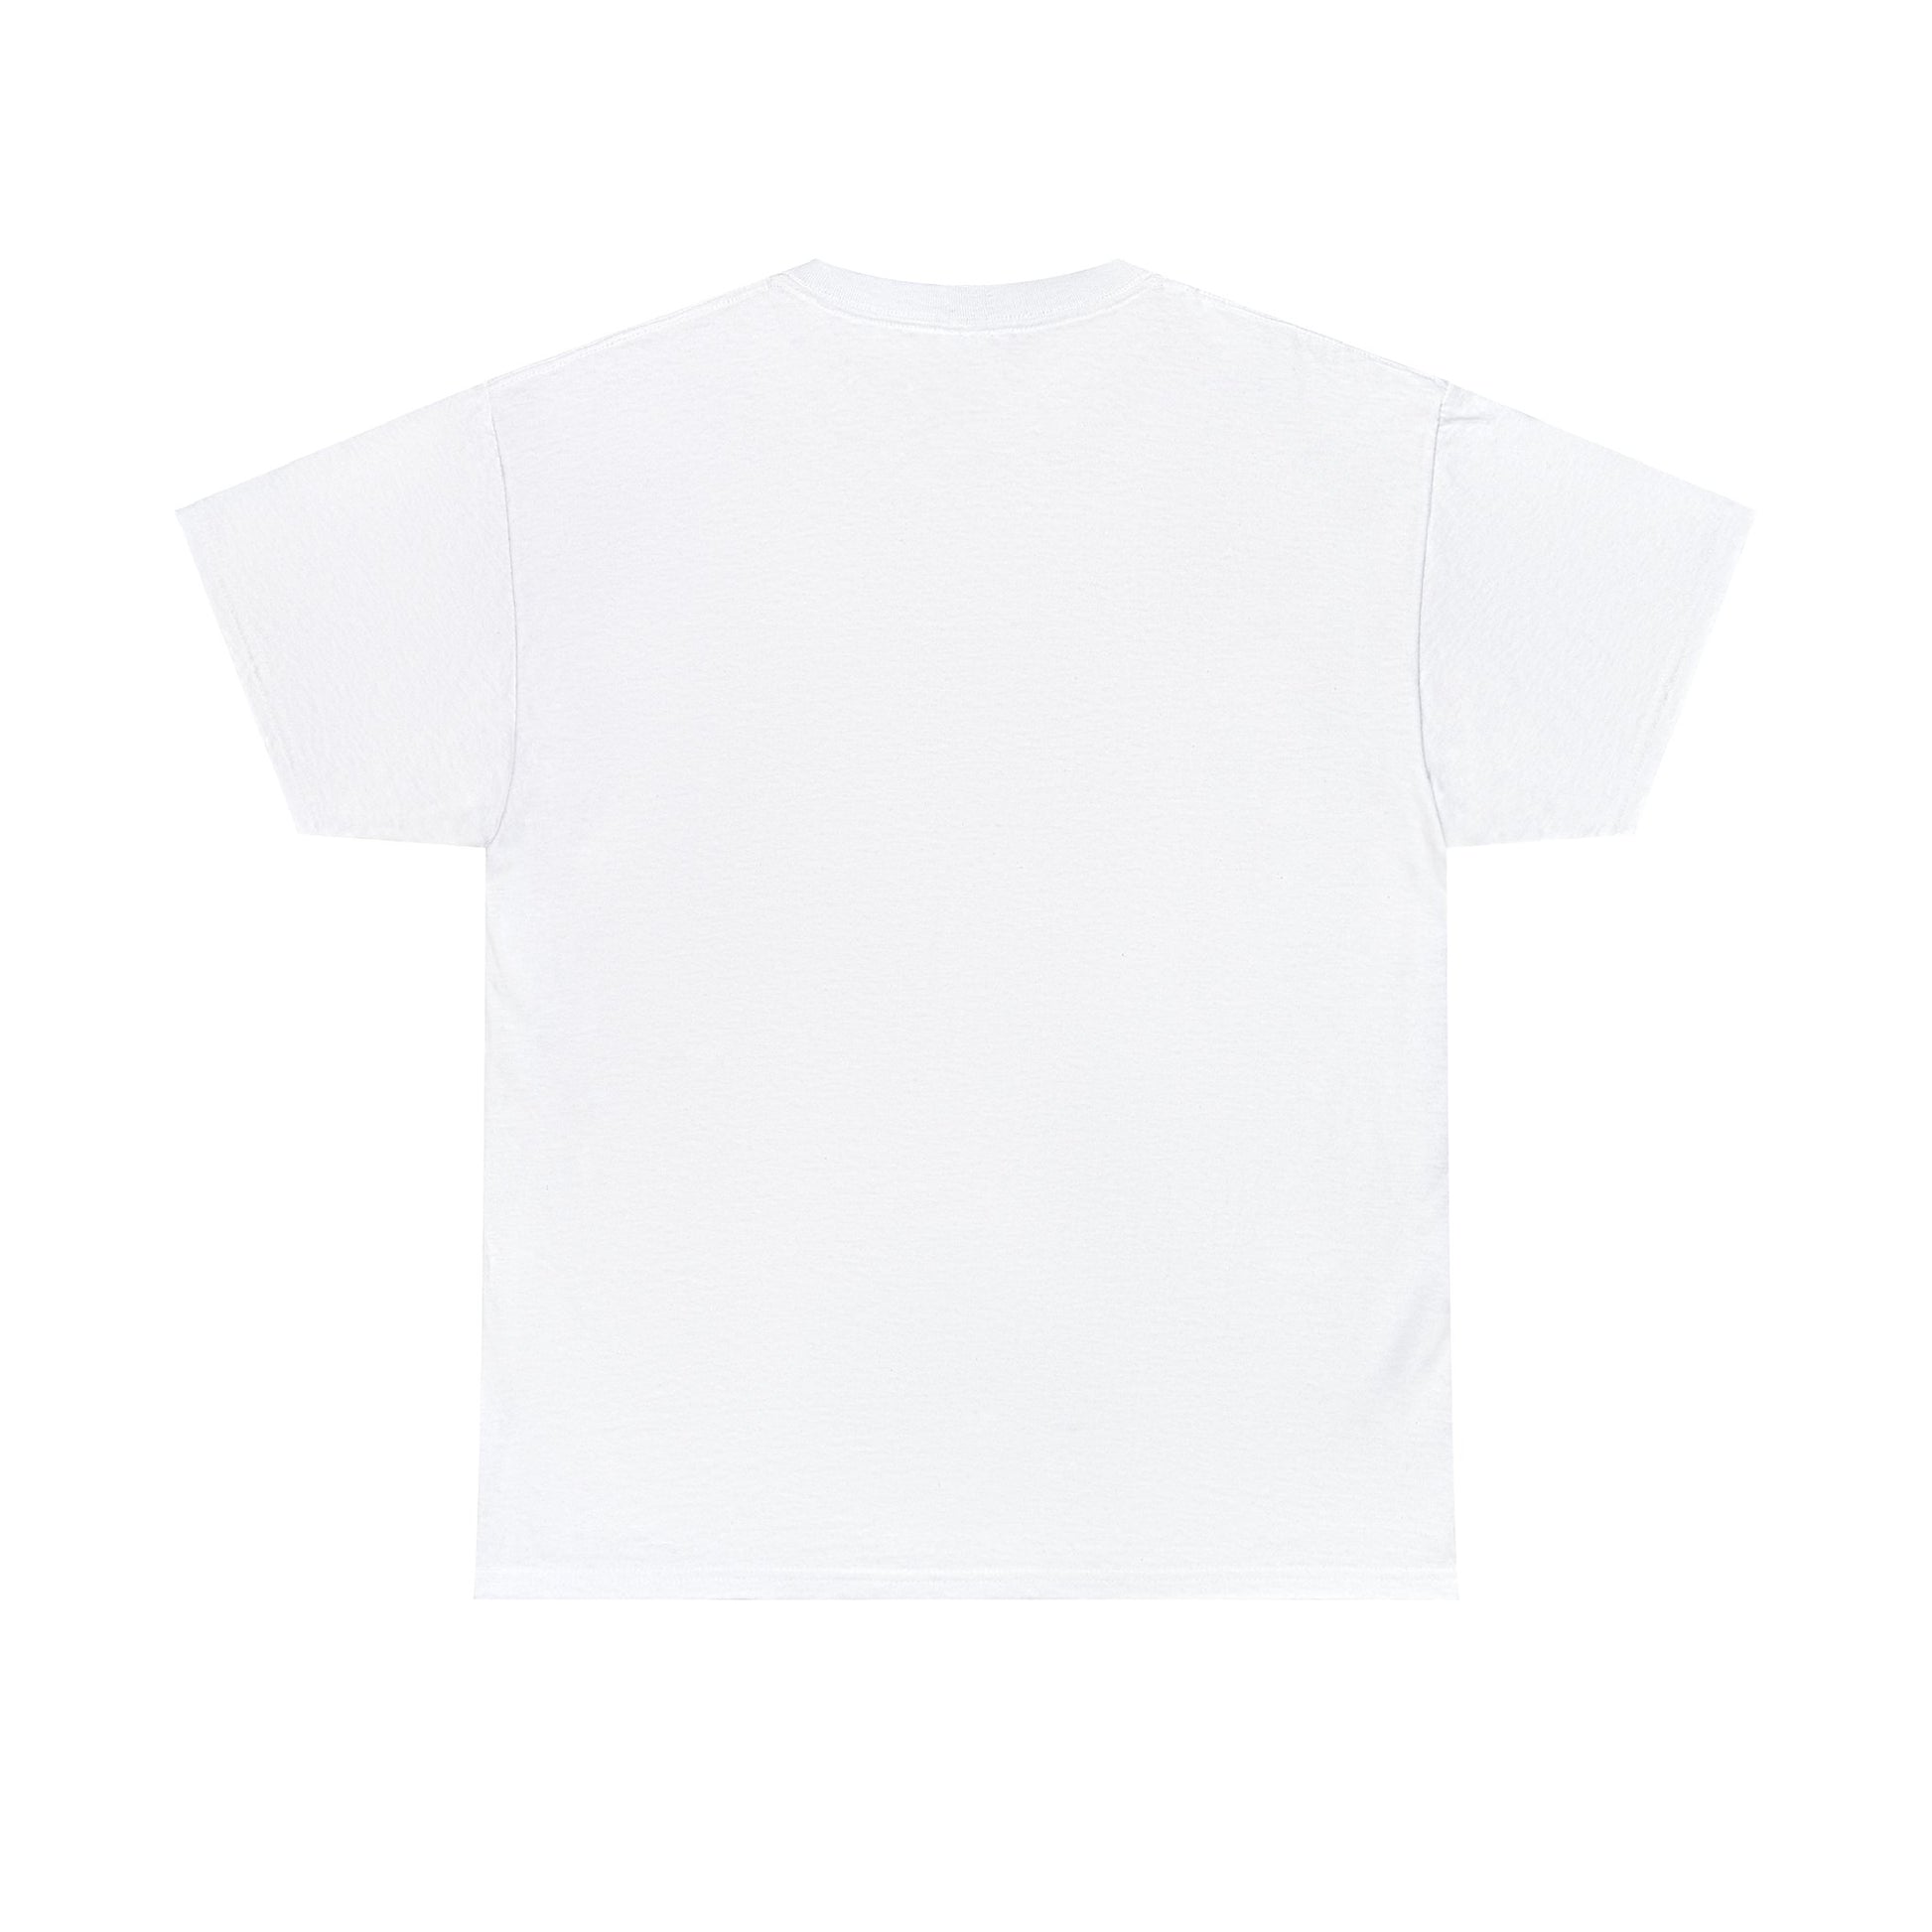 Lega Pro Unisex Heavy Cotton T-shirt